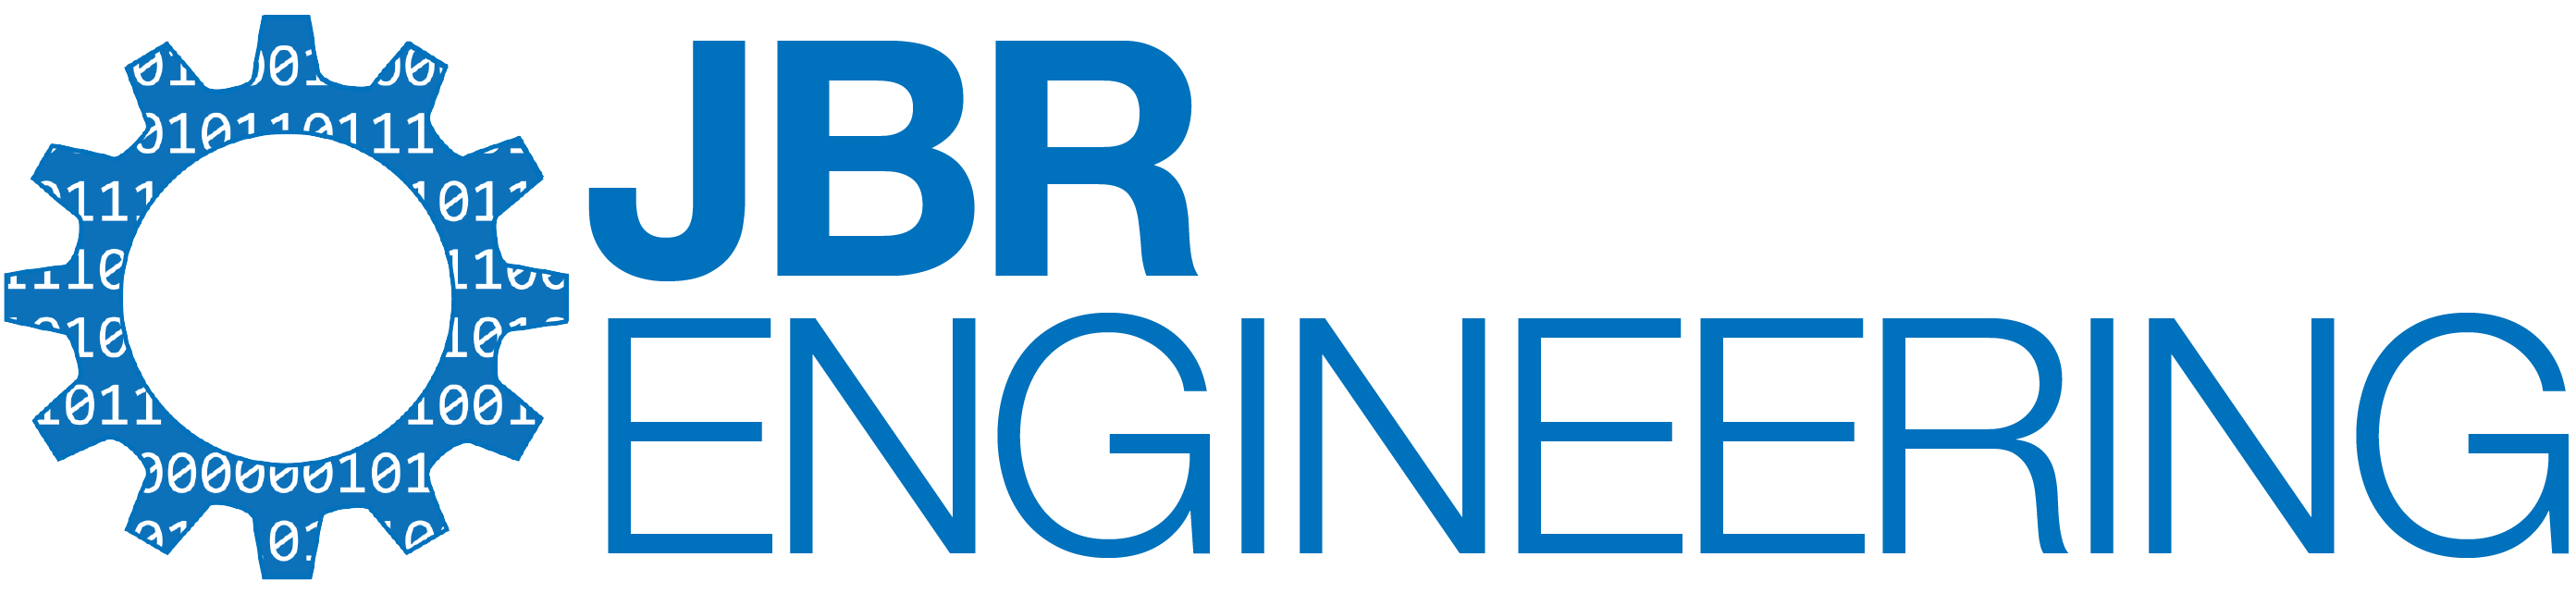 JBR Engineering logo